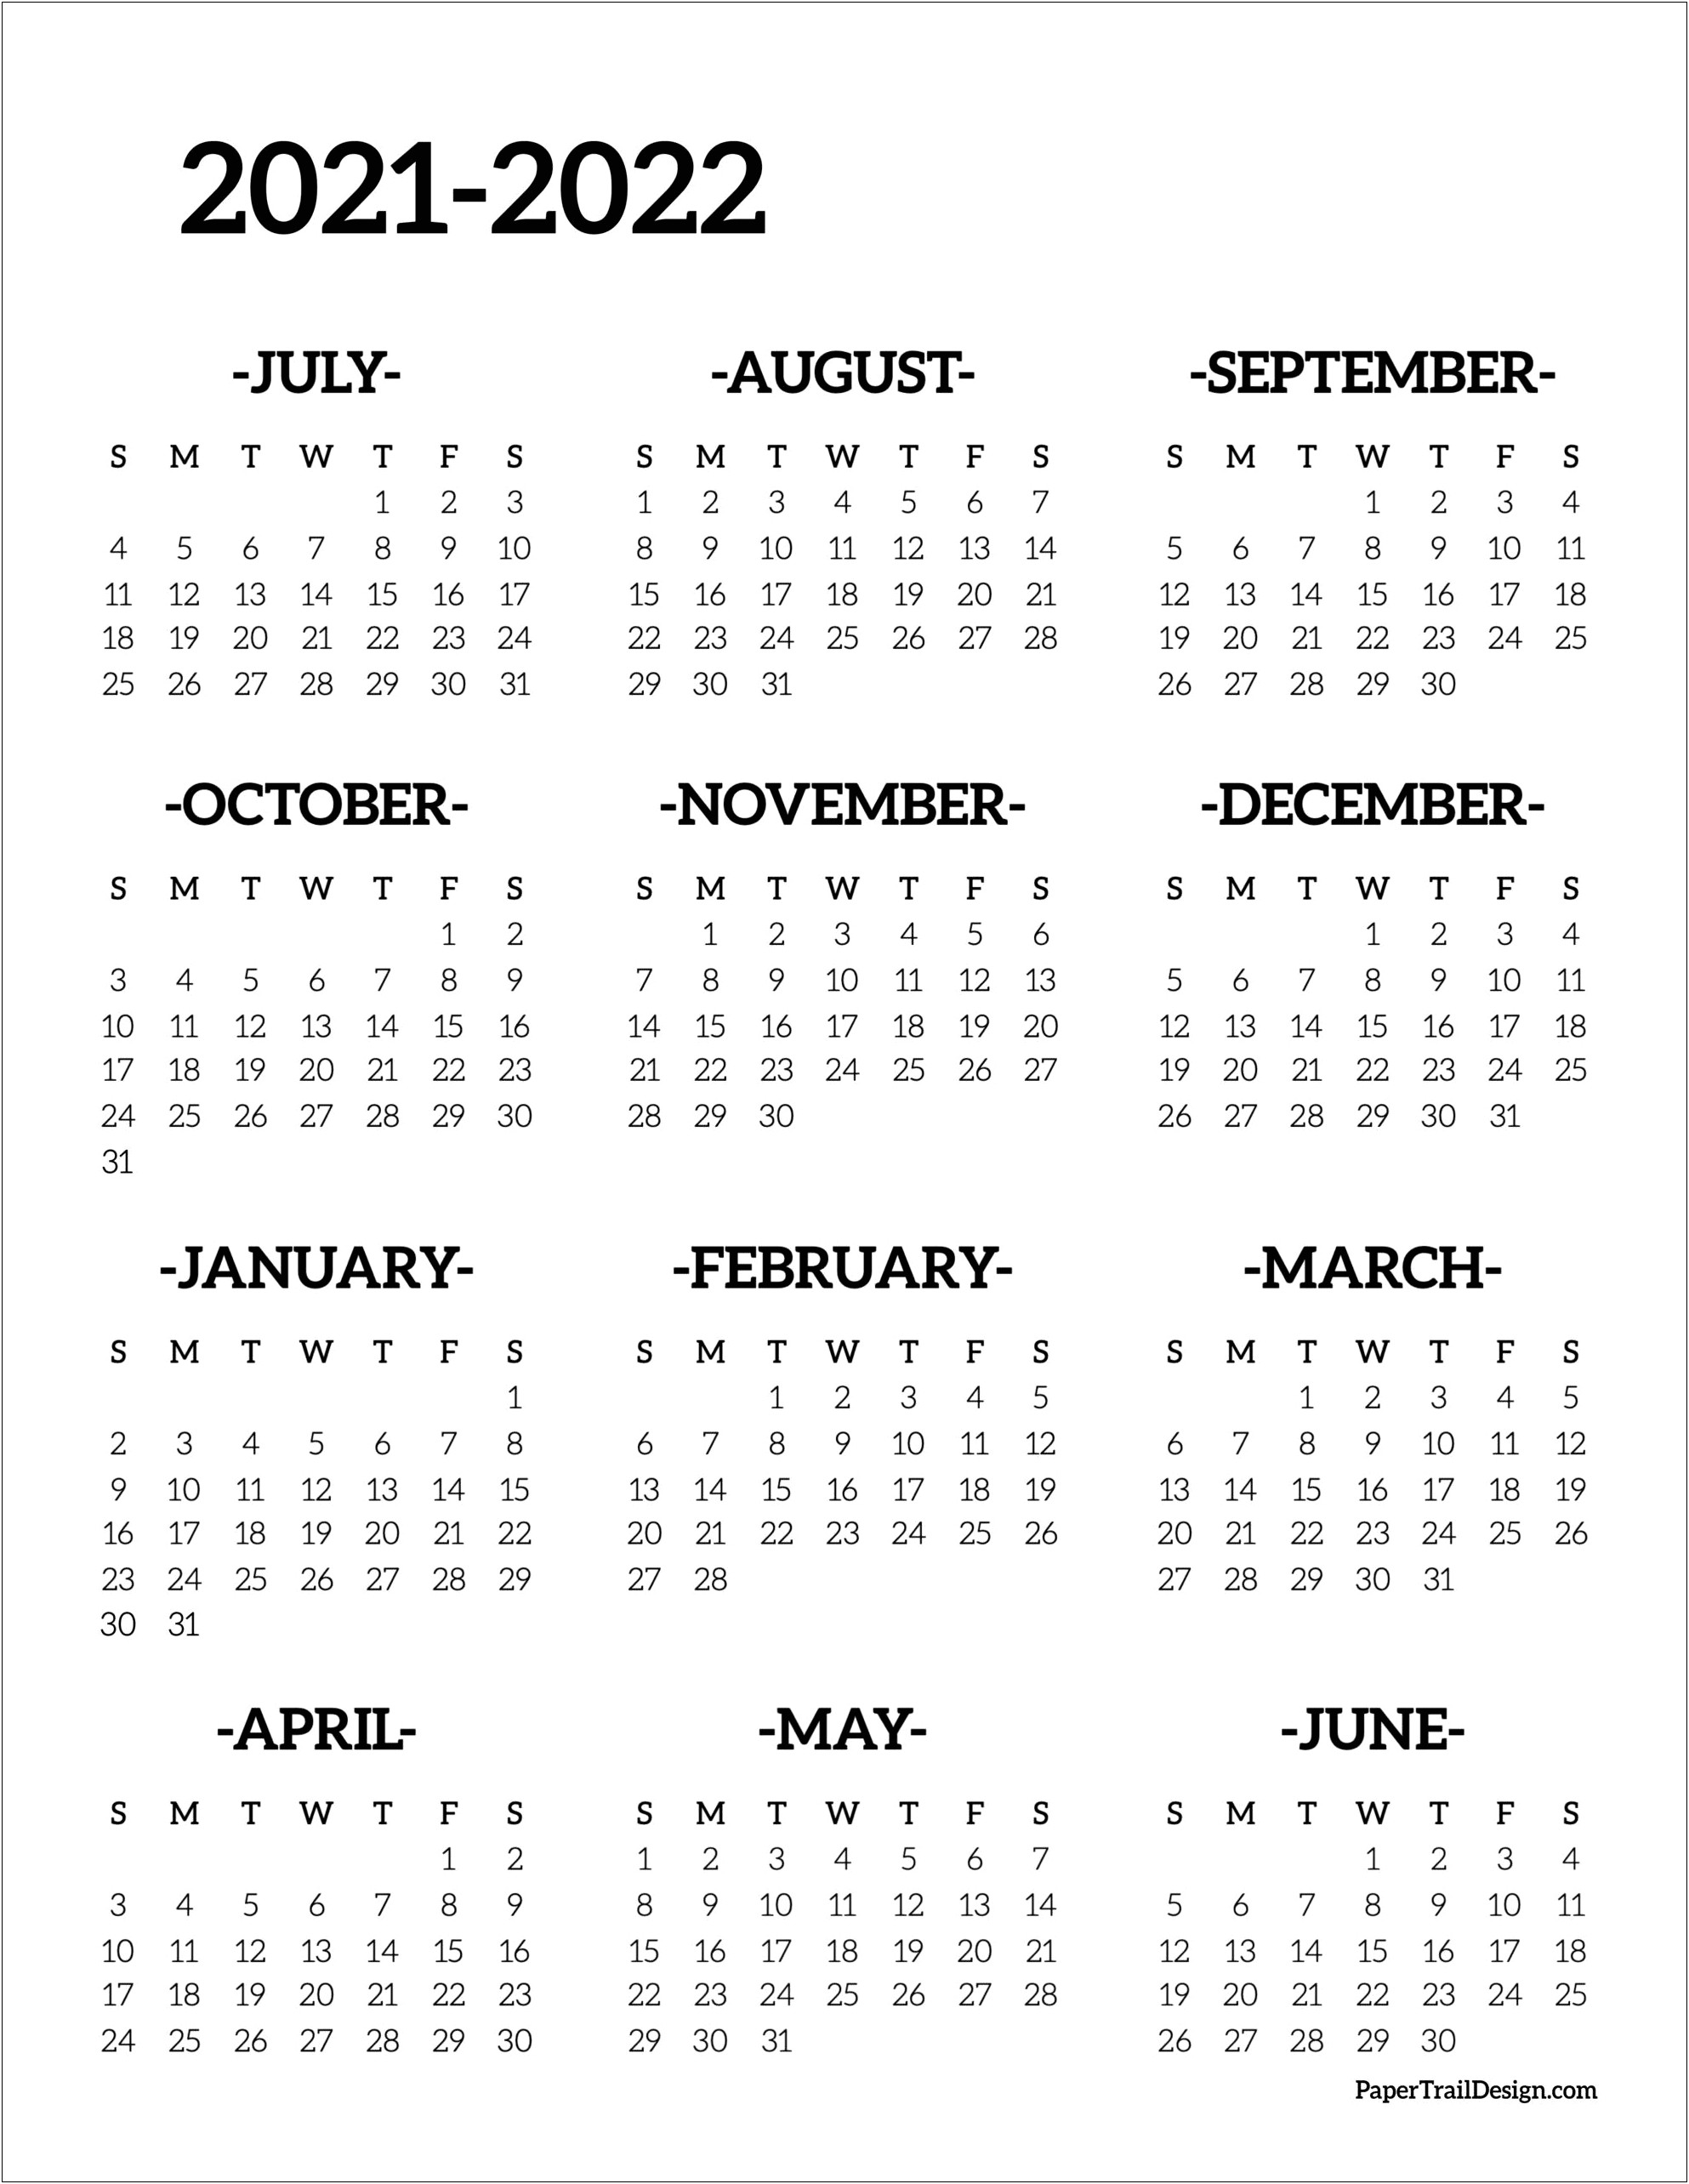 Free School Year Calendar Template 2015 16